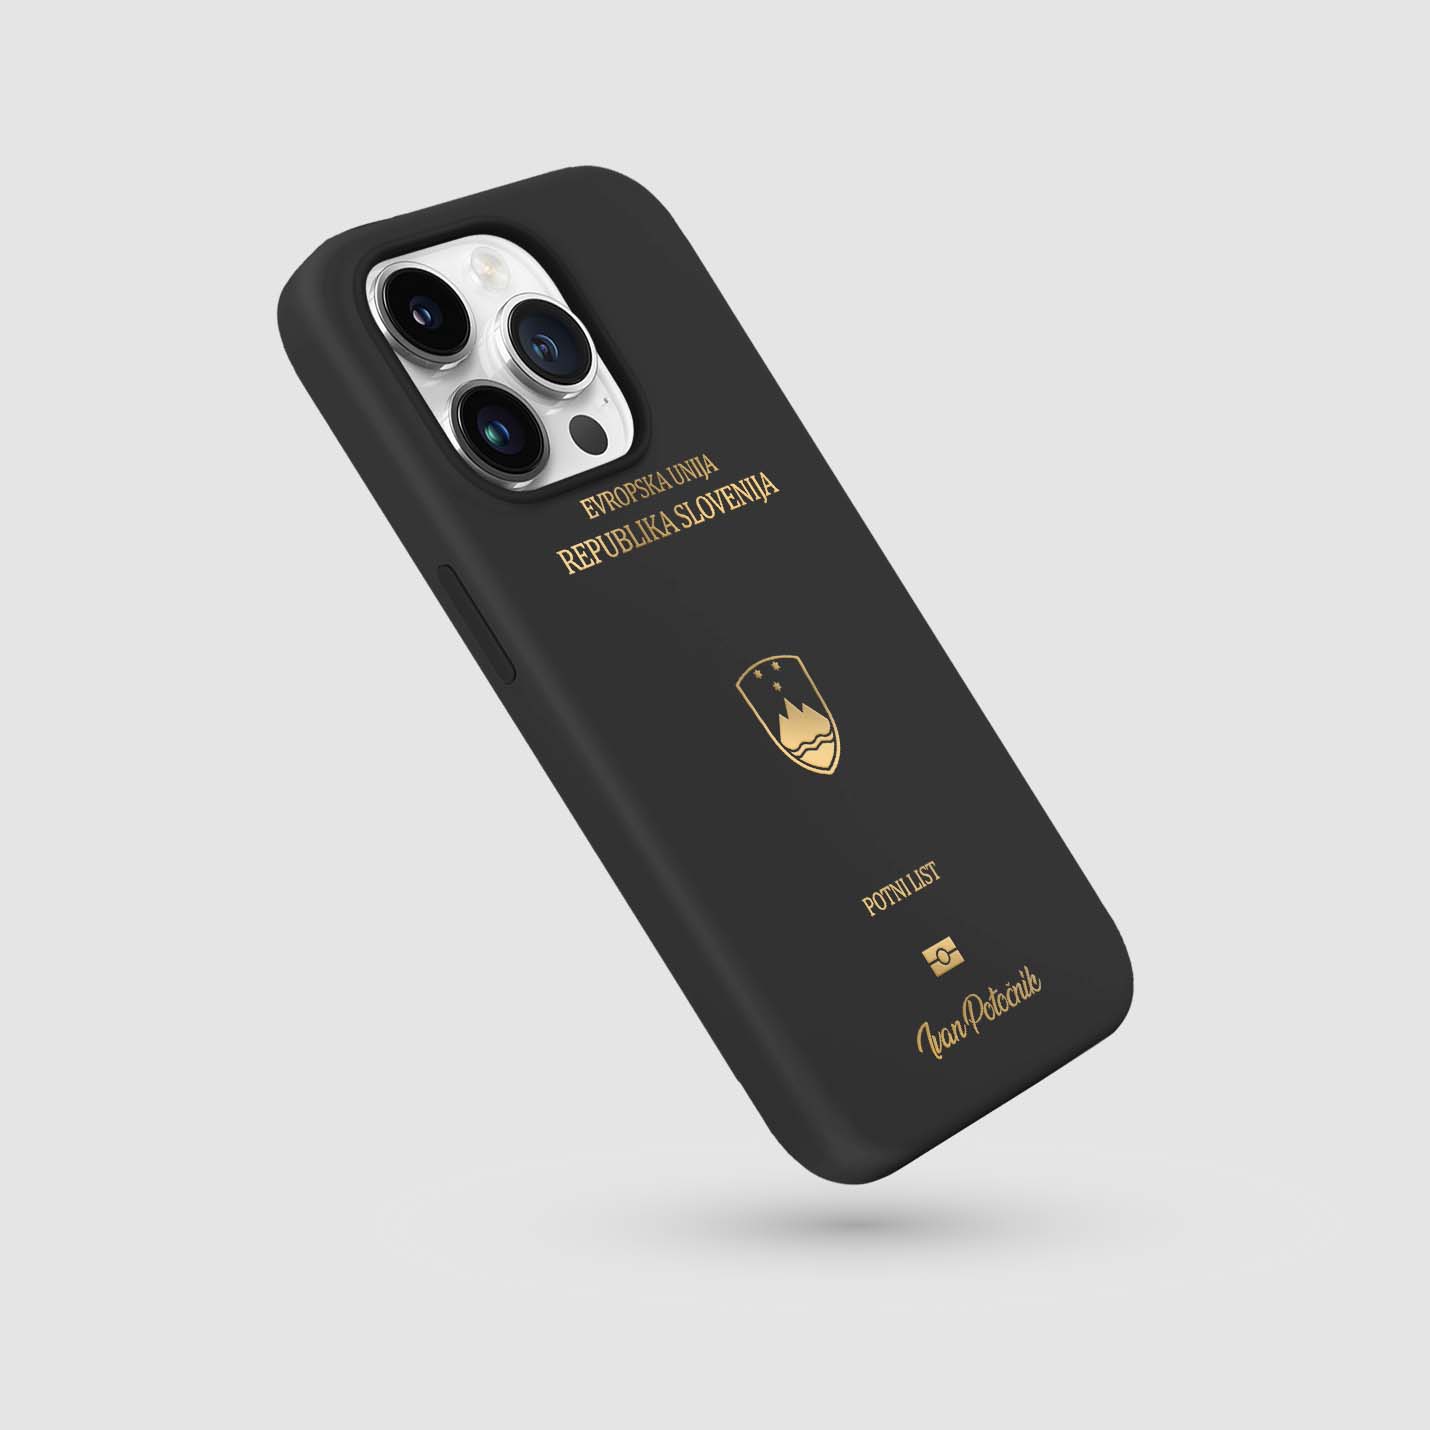 Handyhüllen mit Reisepass - Slowenien - 1instaphone